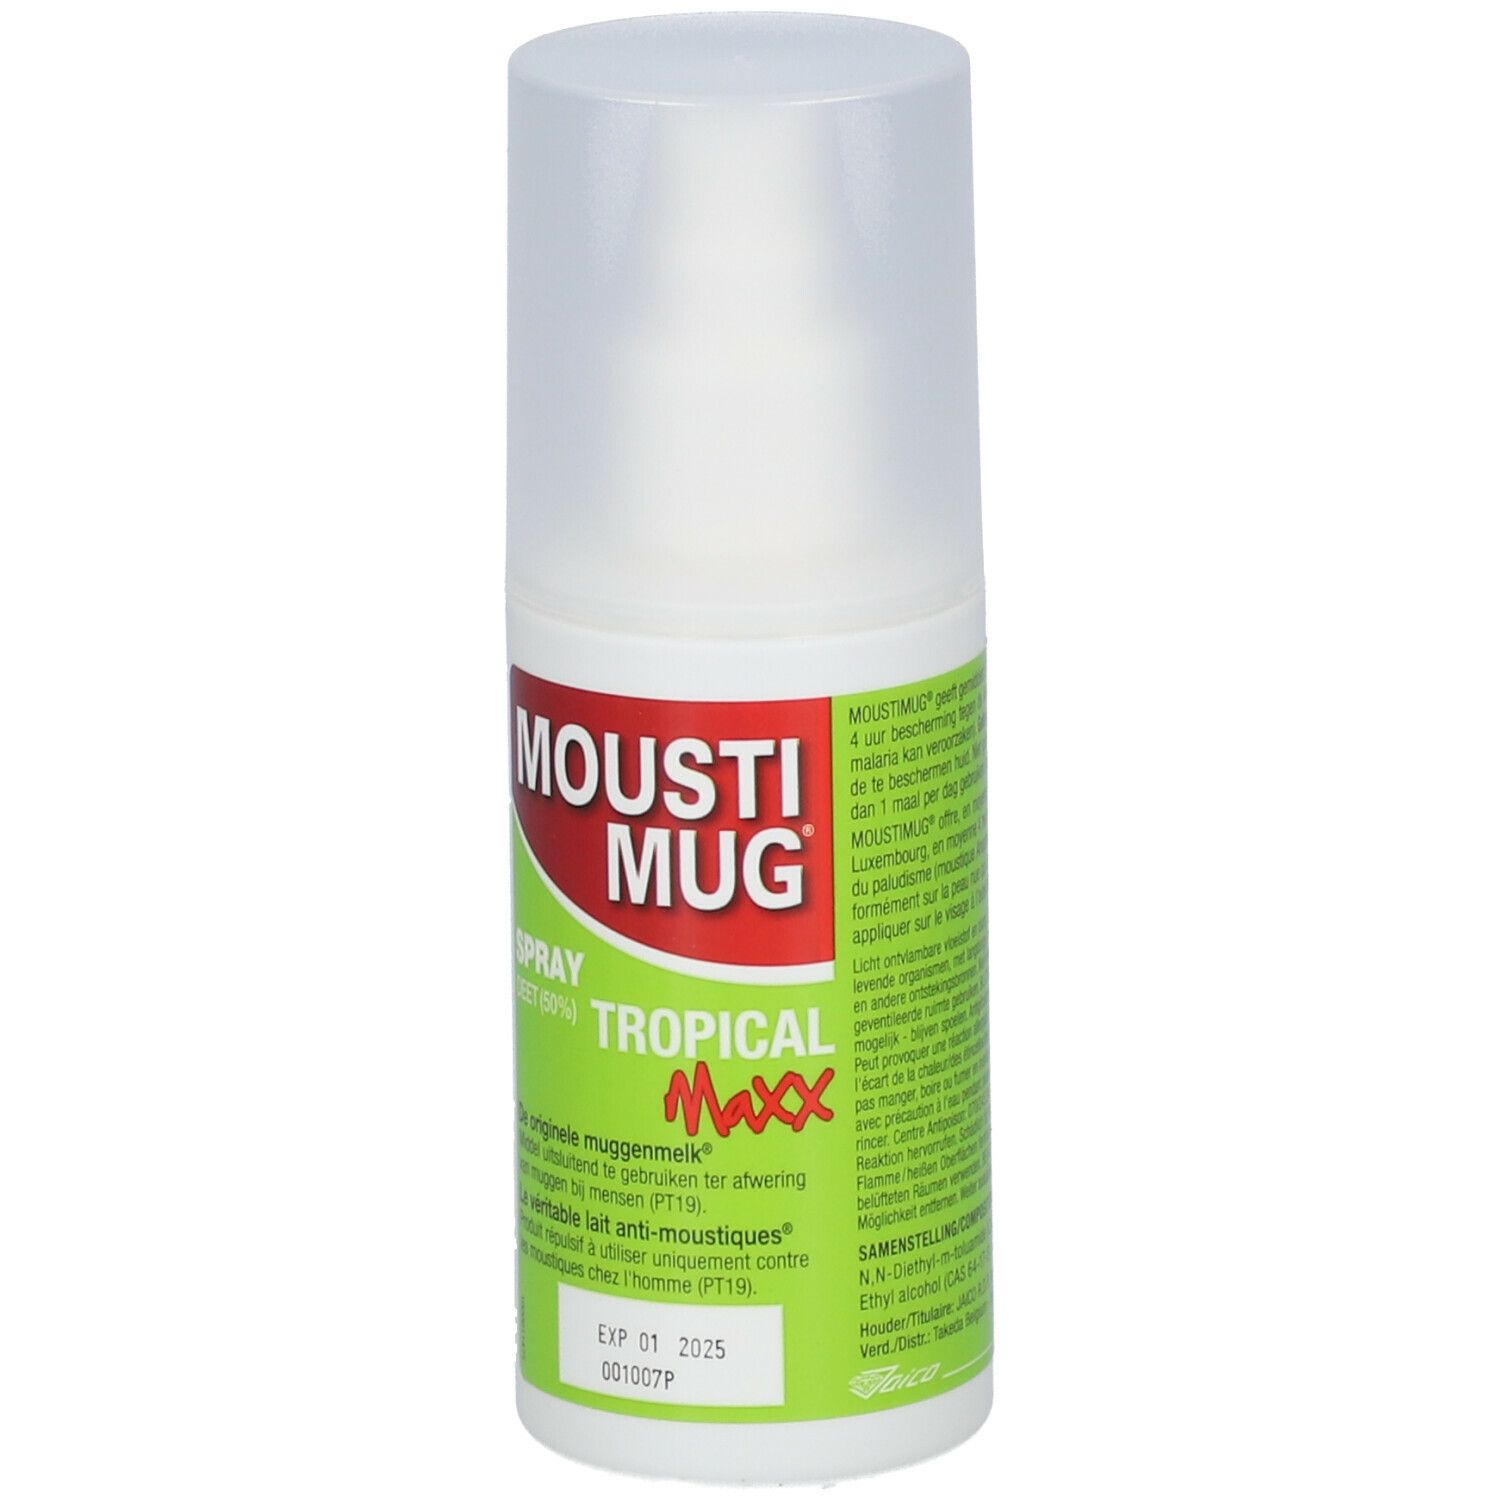 Moustimug Tropical Maxx Spray 50% DEET 100 ml - Redcare Pharmacie